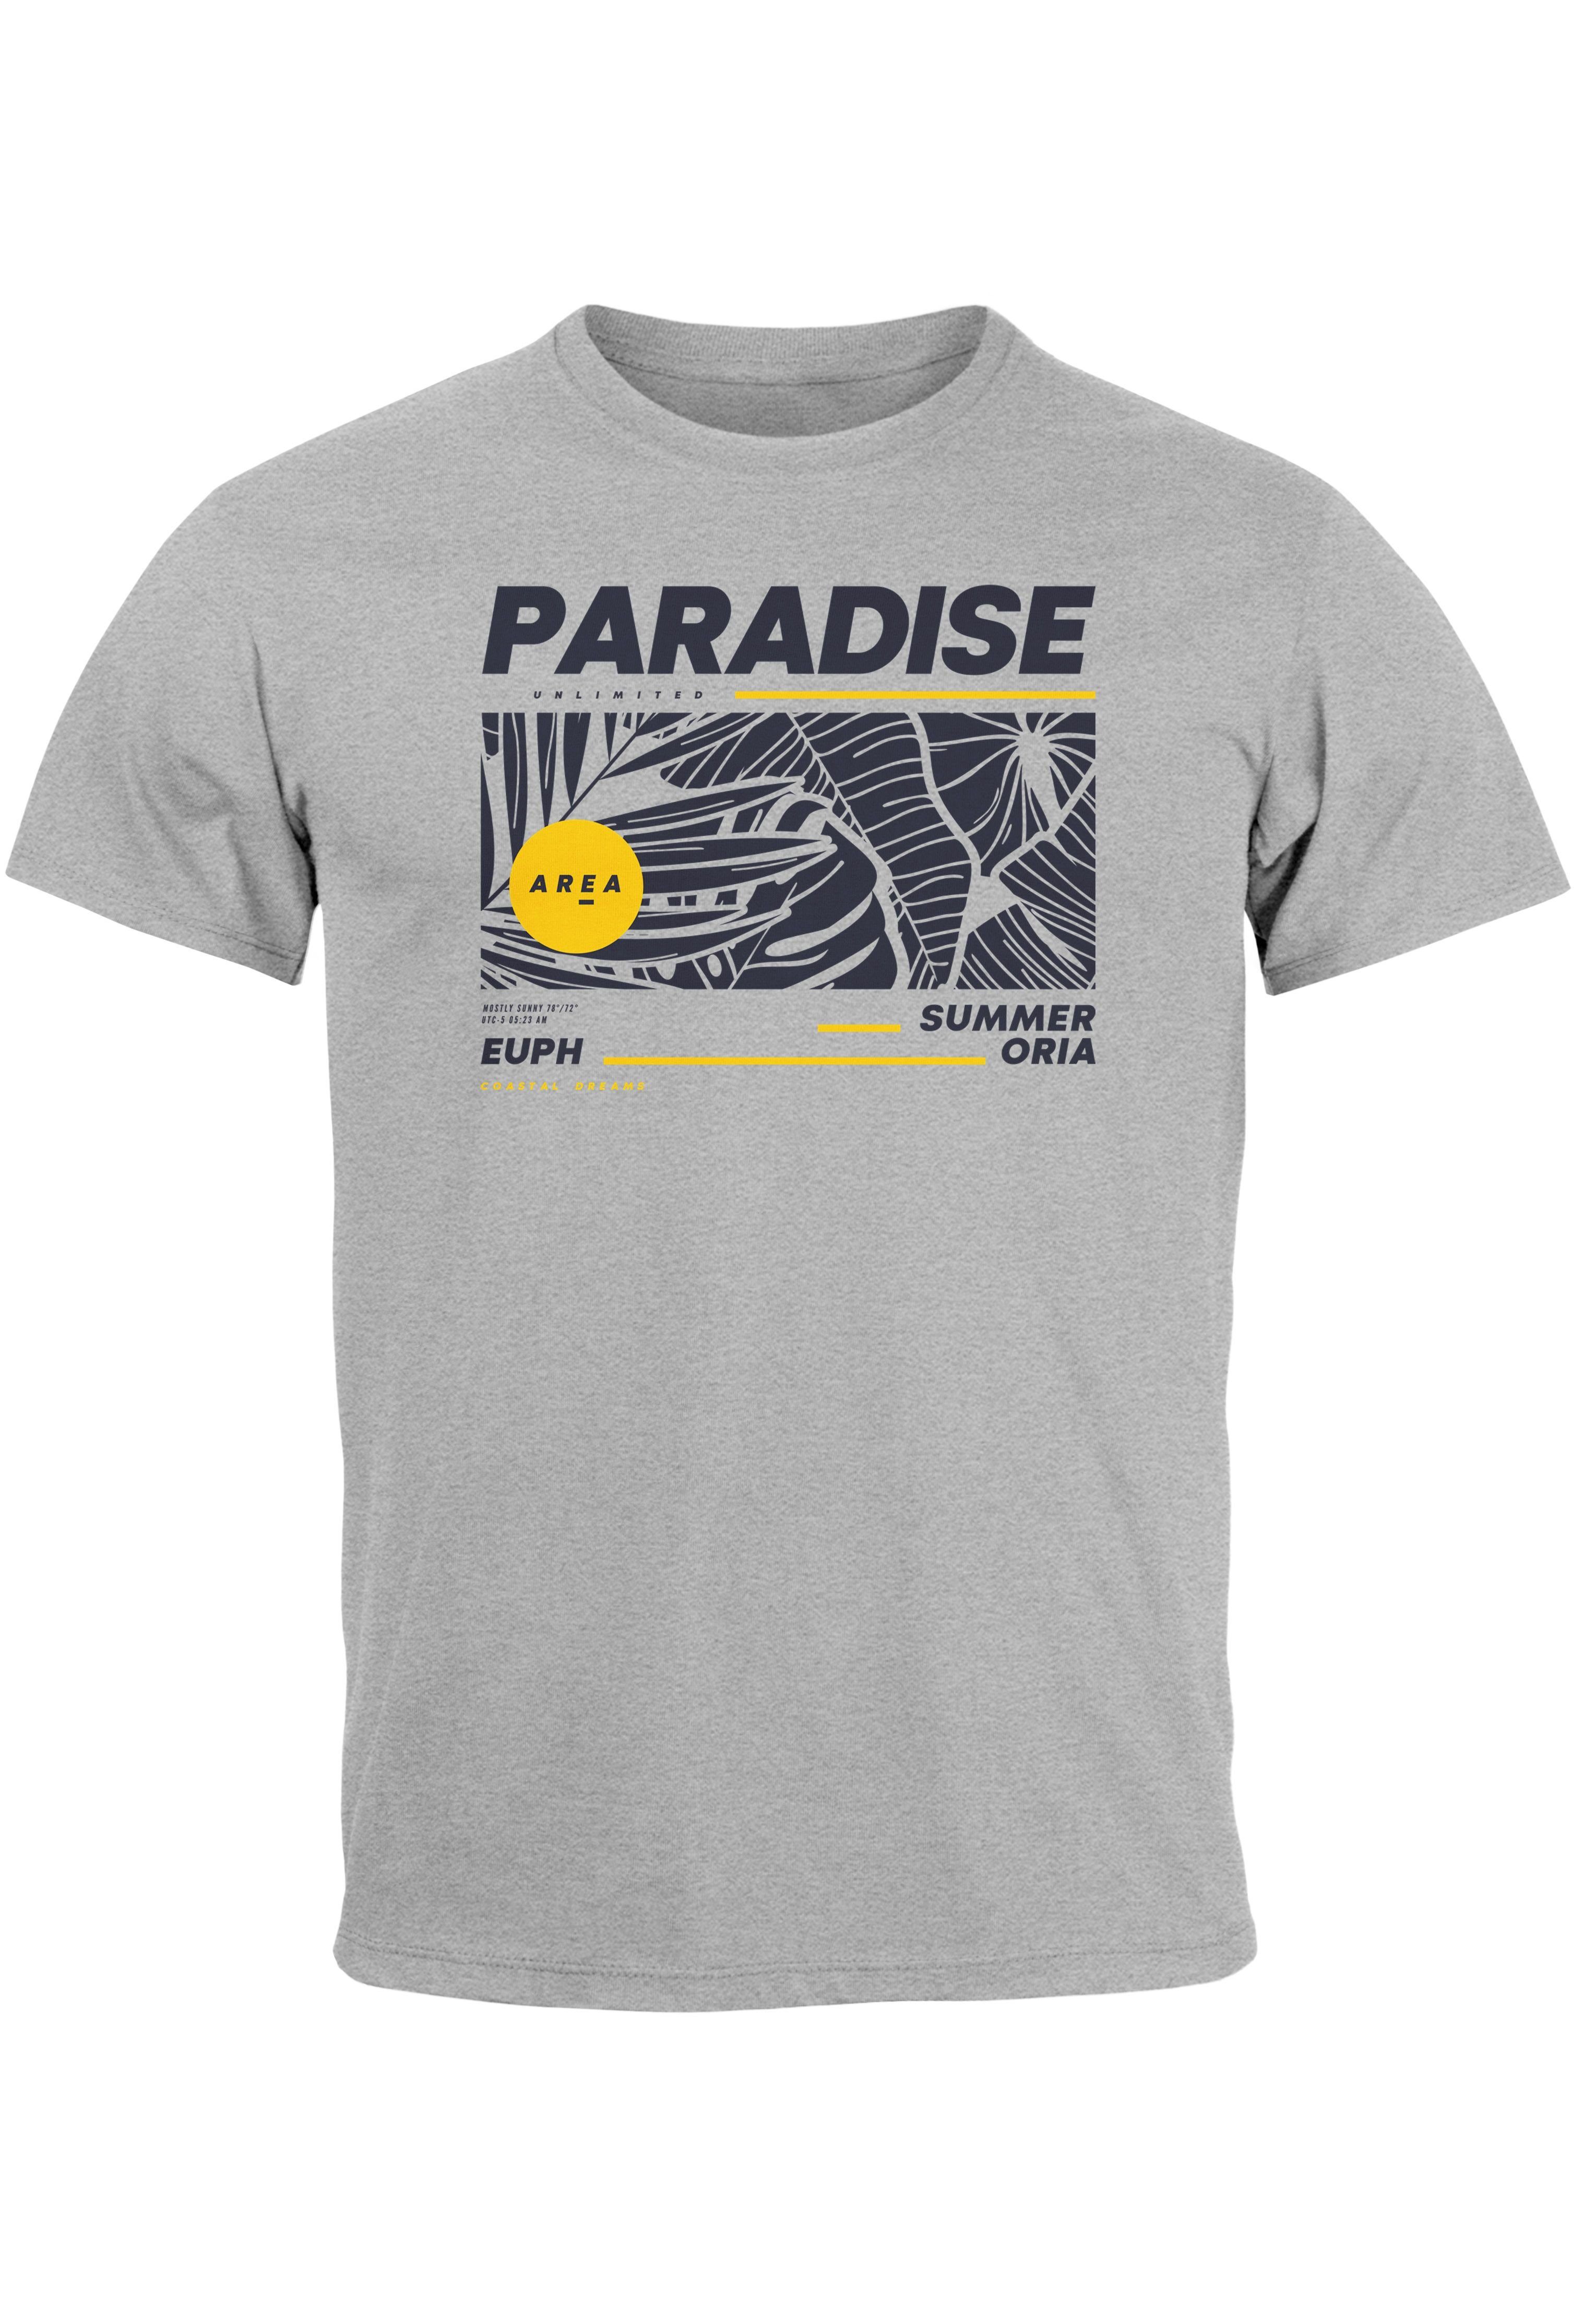 Sommer Teachwear Neverless Paradise Unlimited grau Print-Shirt mit Aufdruck Print Fash Herren Motiv T-Shirt